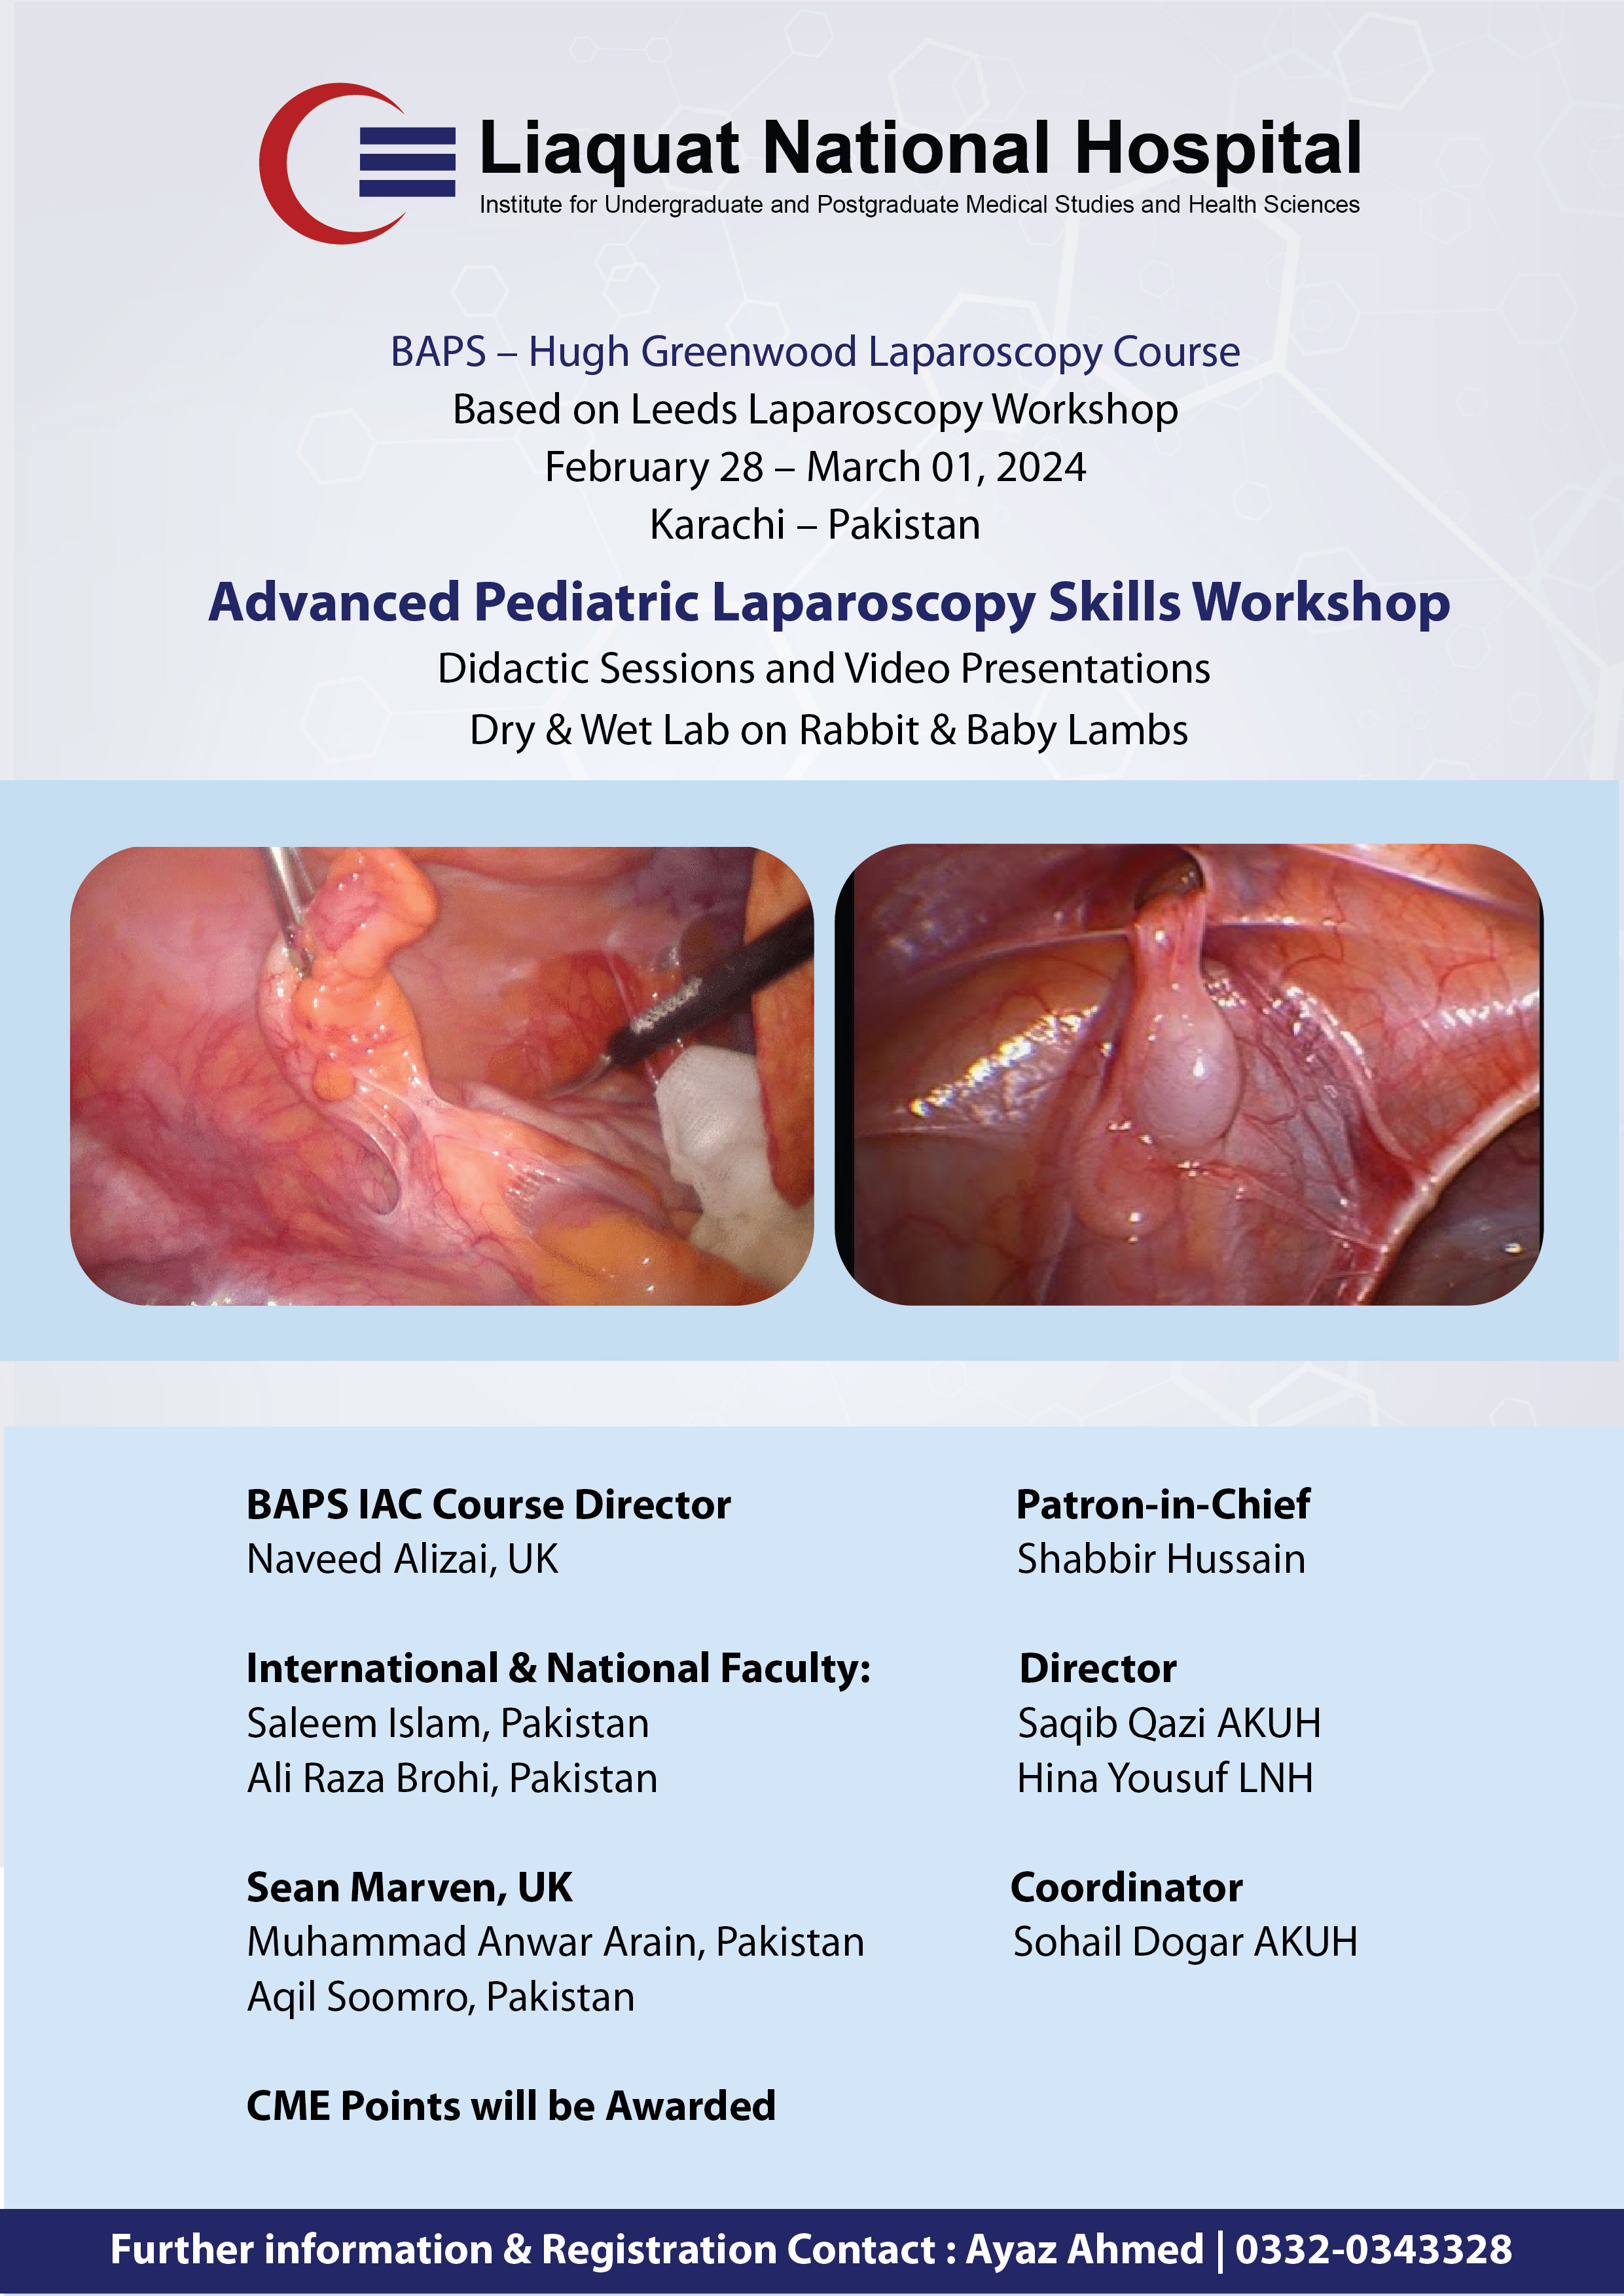 Advanced Paediatric Laparoscopic Skills Workshop